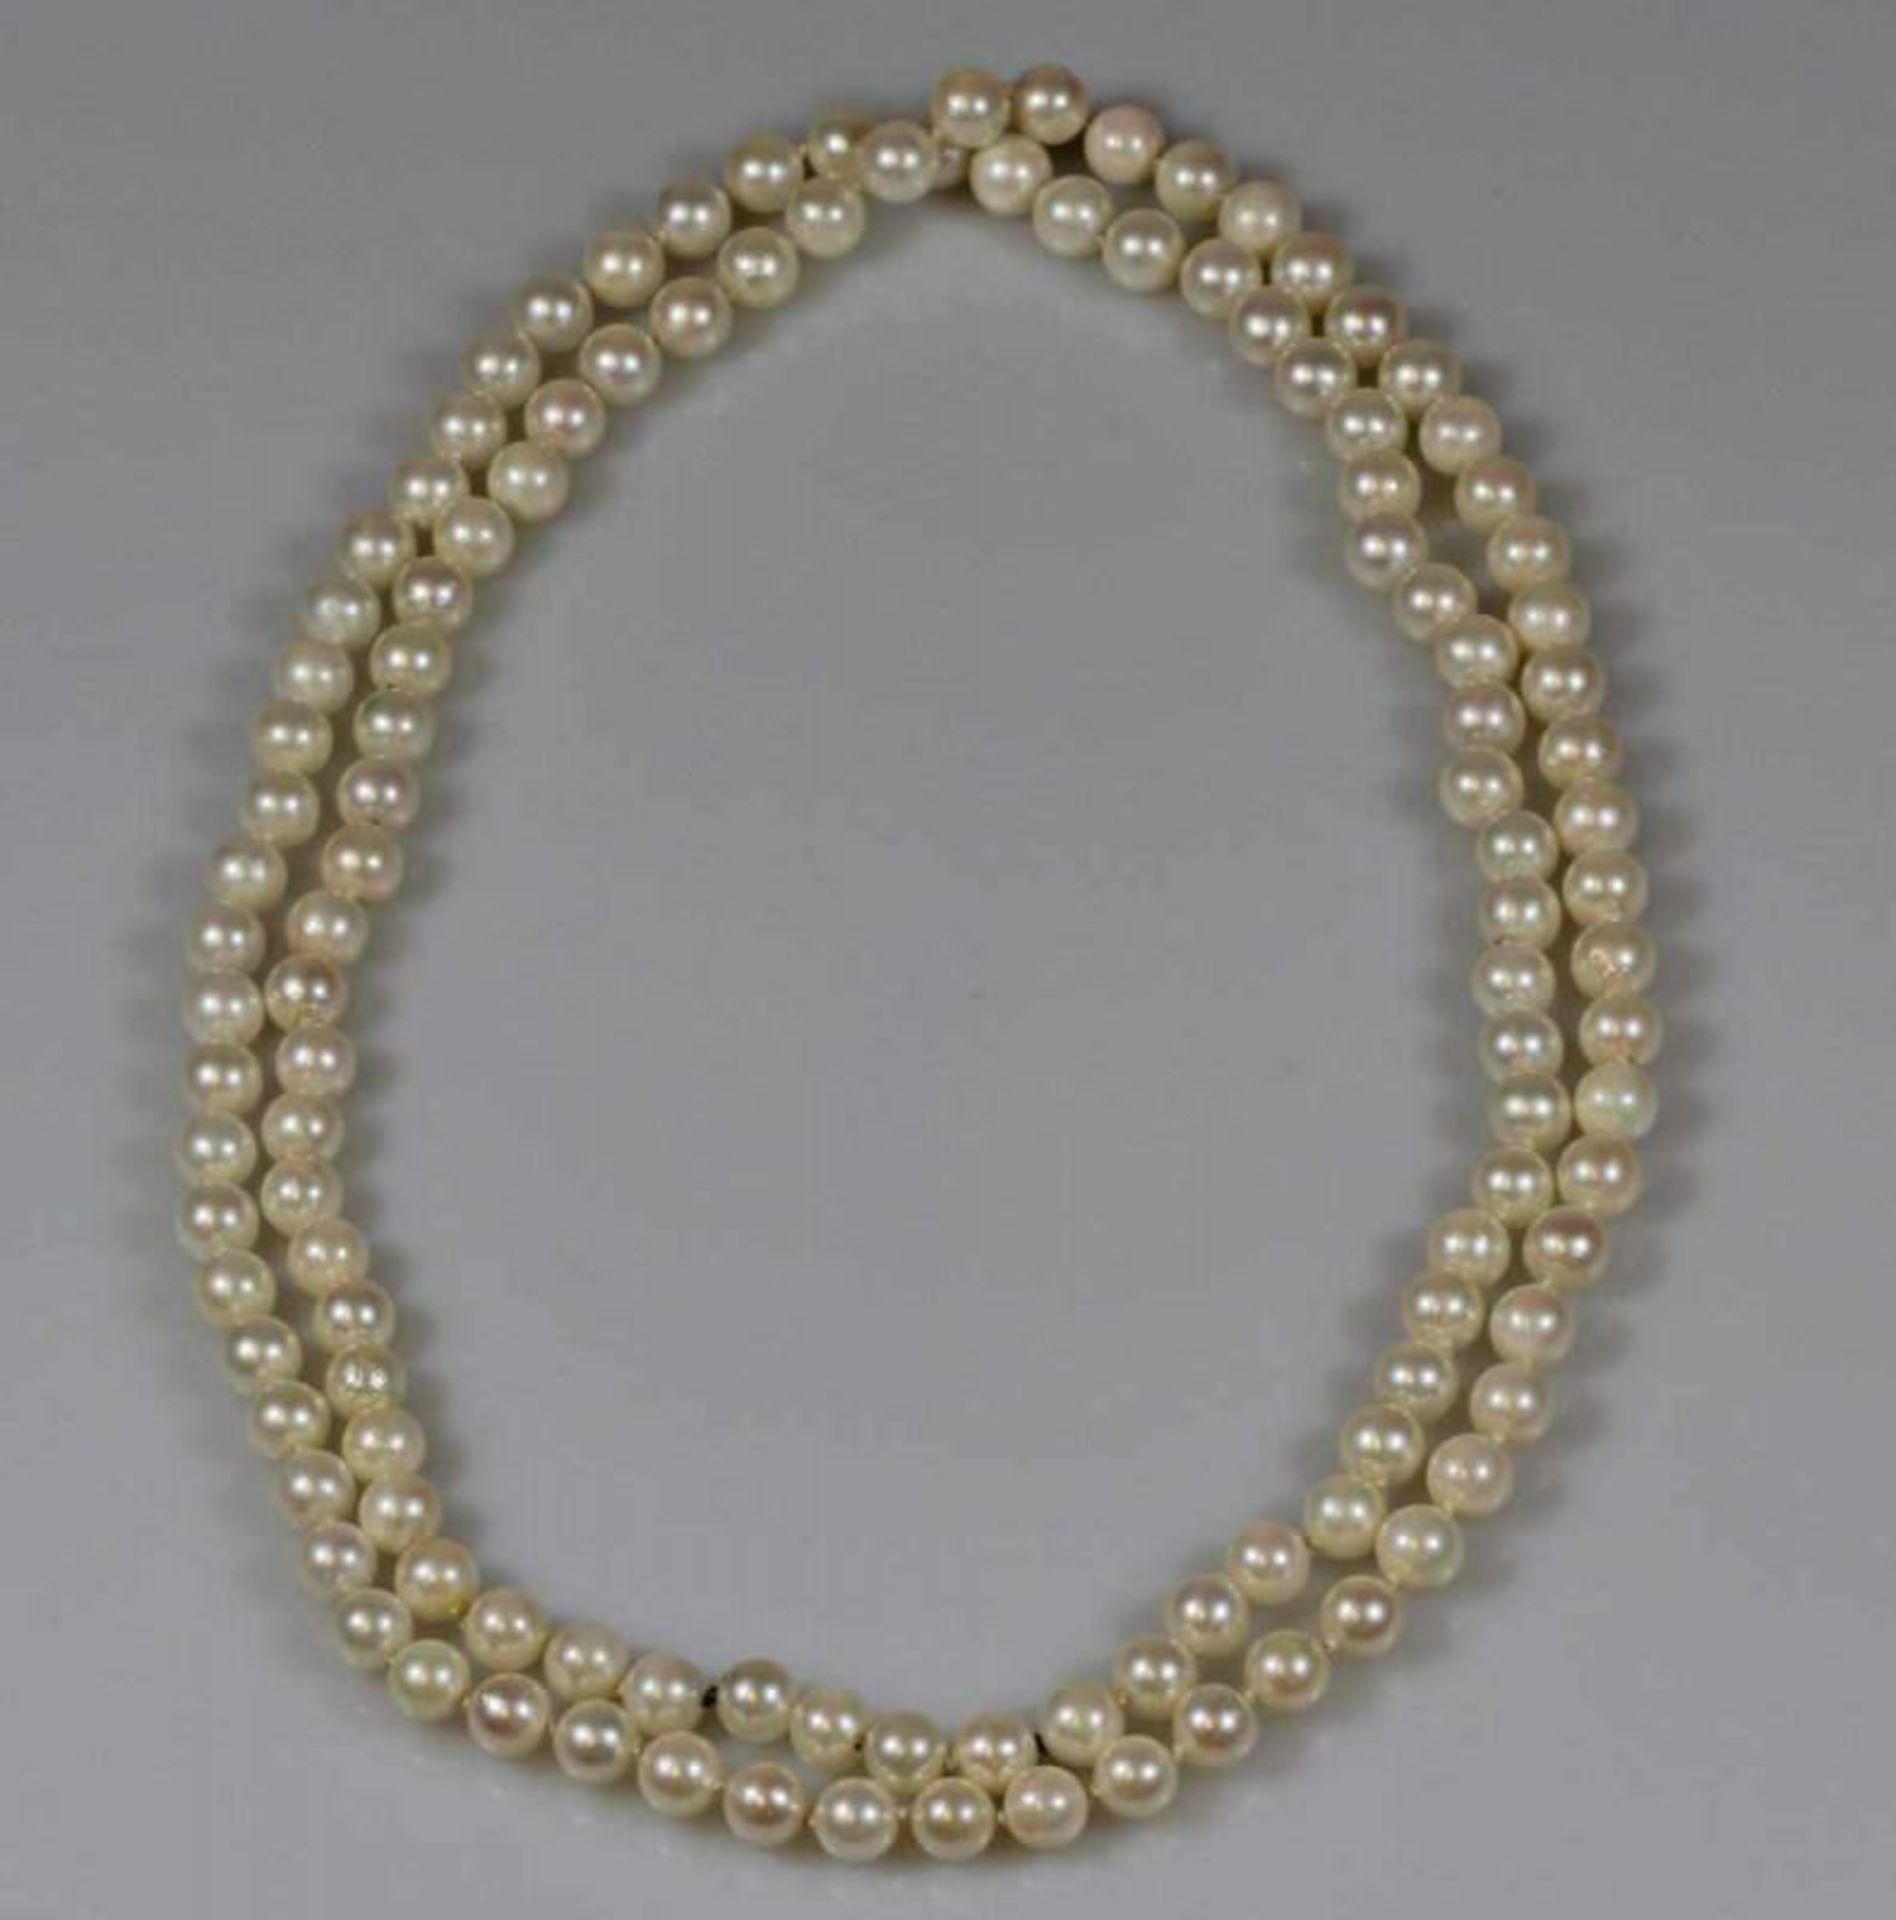 Perlenkette, 122 Akoya-Zuchtperlen ø ca. 6.5 mm, endlos, 94 cm lang 20.00 % buyer's premium on the